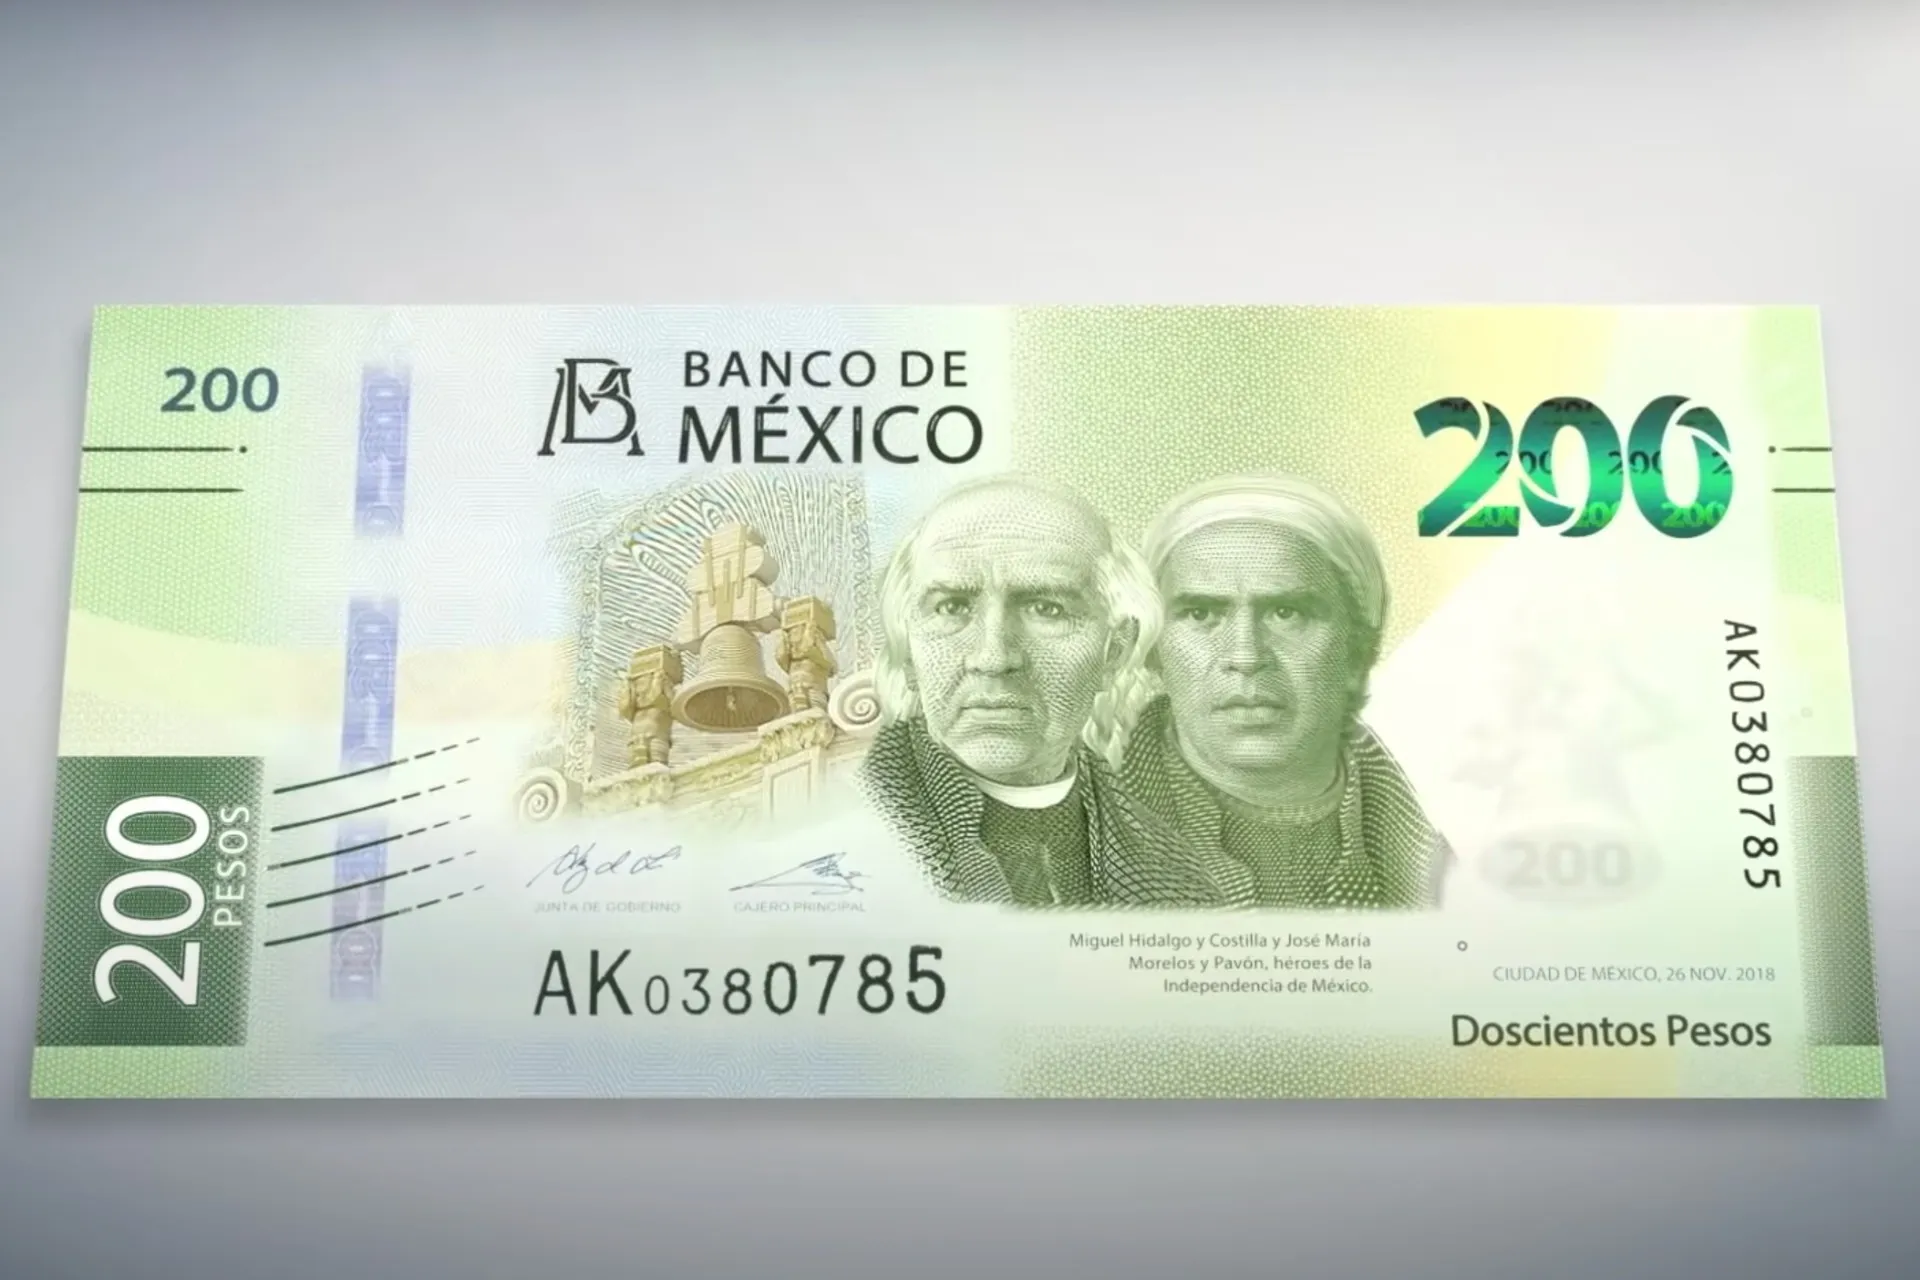 Lanzan billete de 200 pesos para celebrar autonomía de Banxico